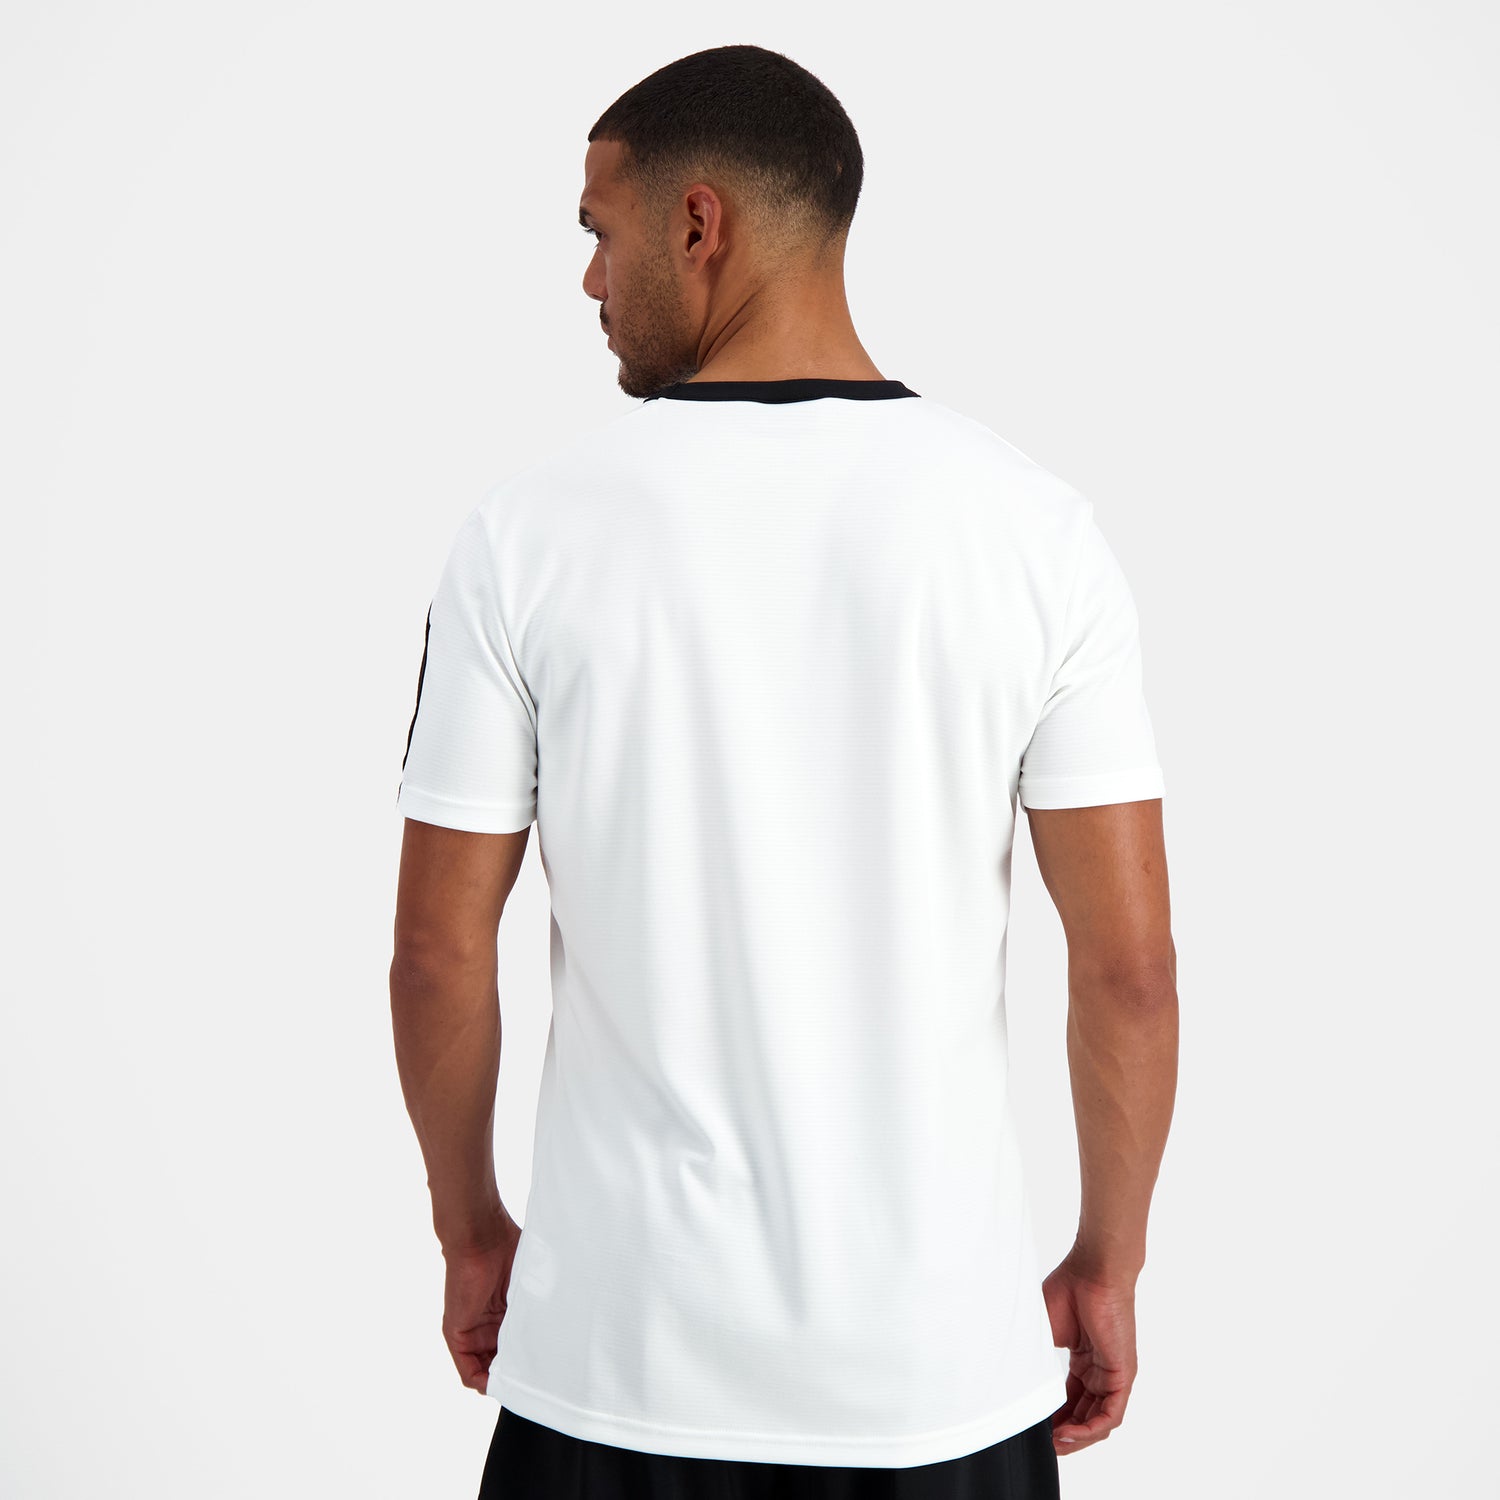 2220022-N°1 TRAINING Tee SS M new optical white | T-shirt Homme